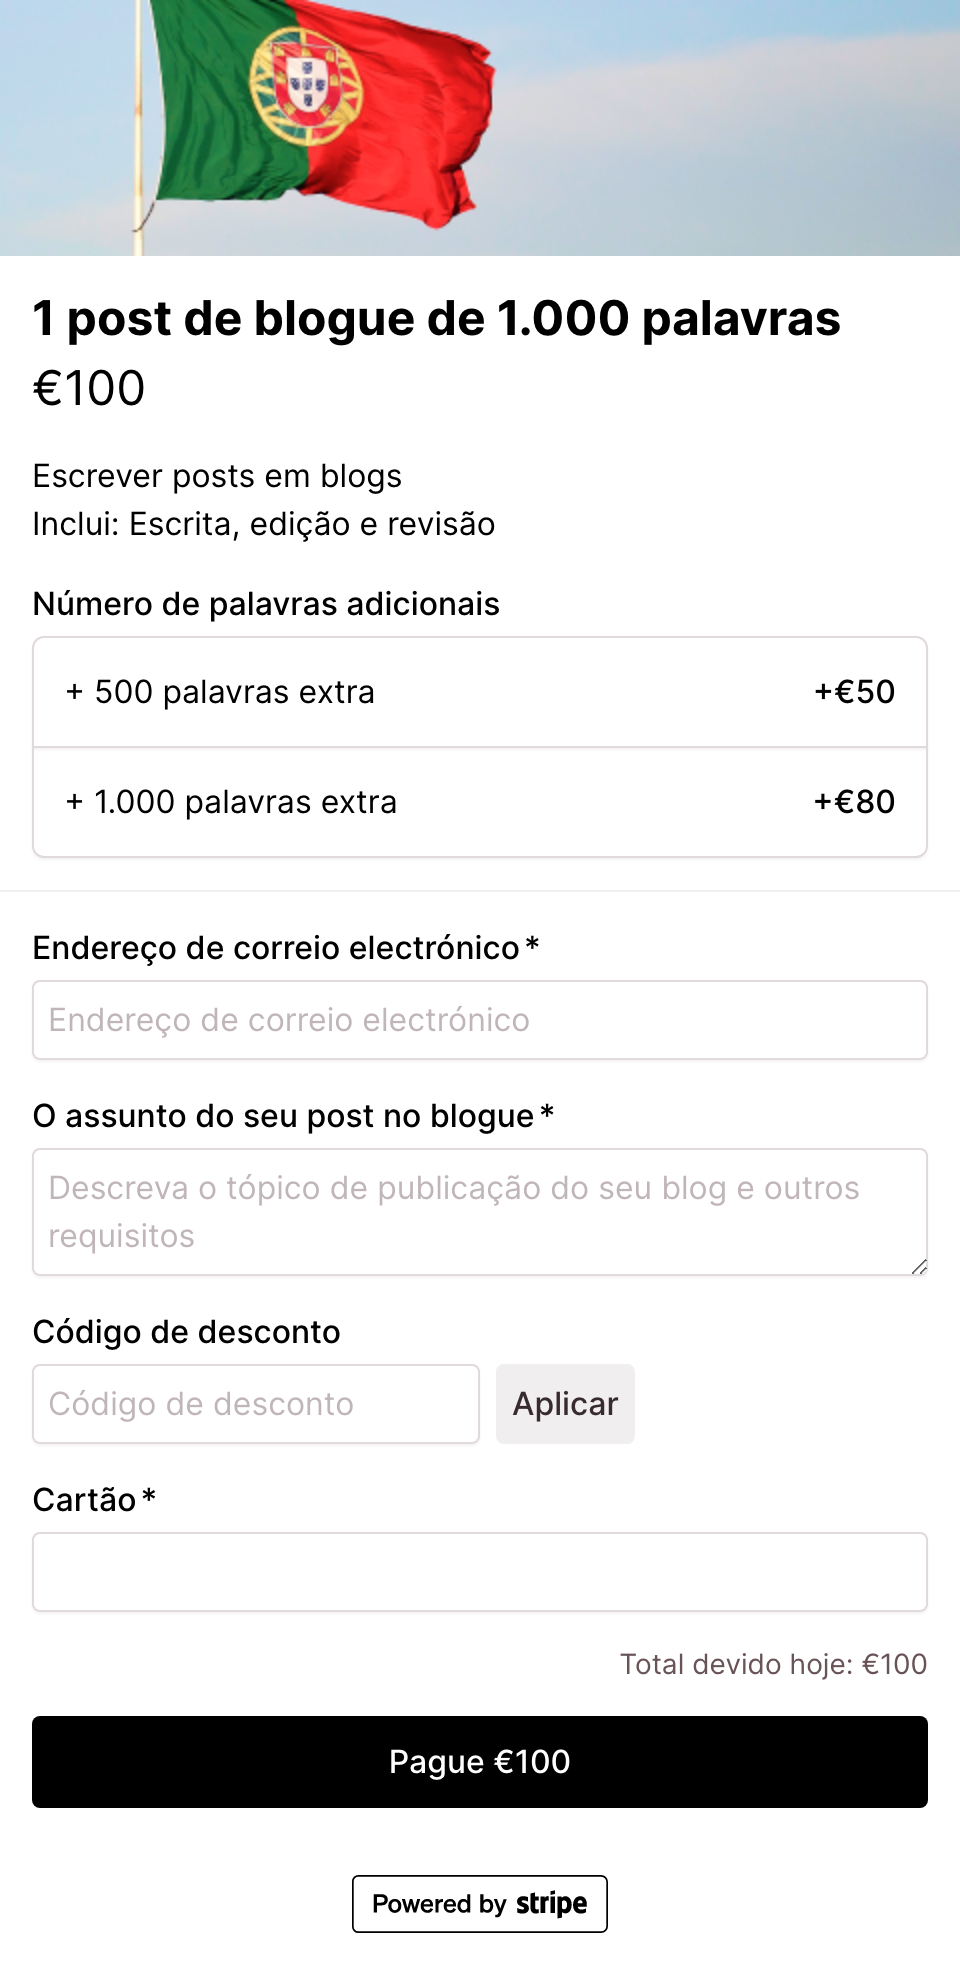 Portuguese translated checkout form